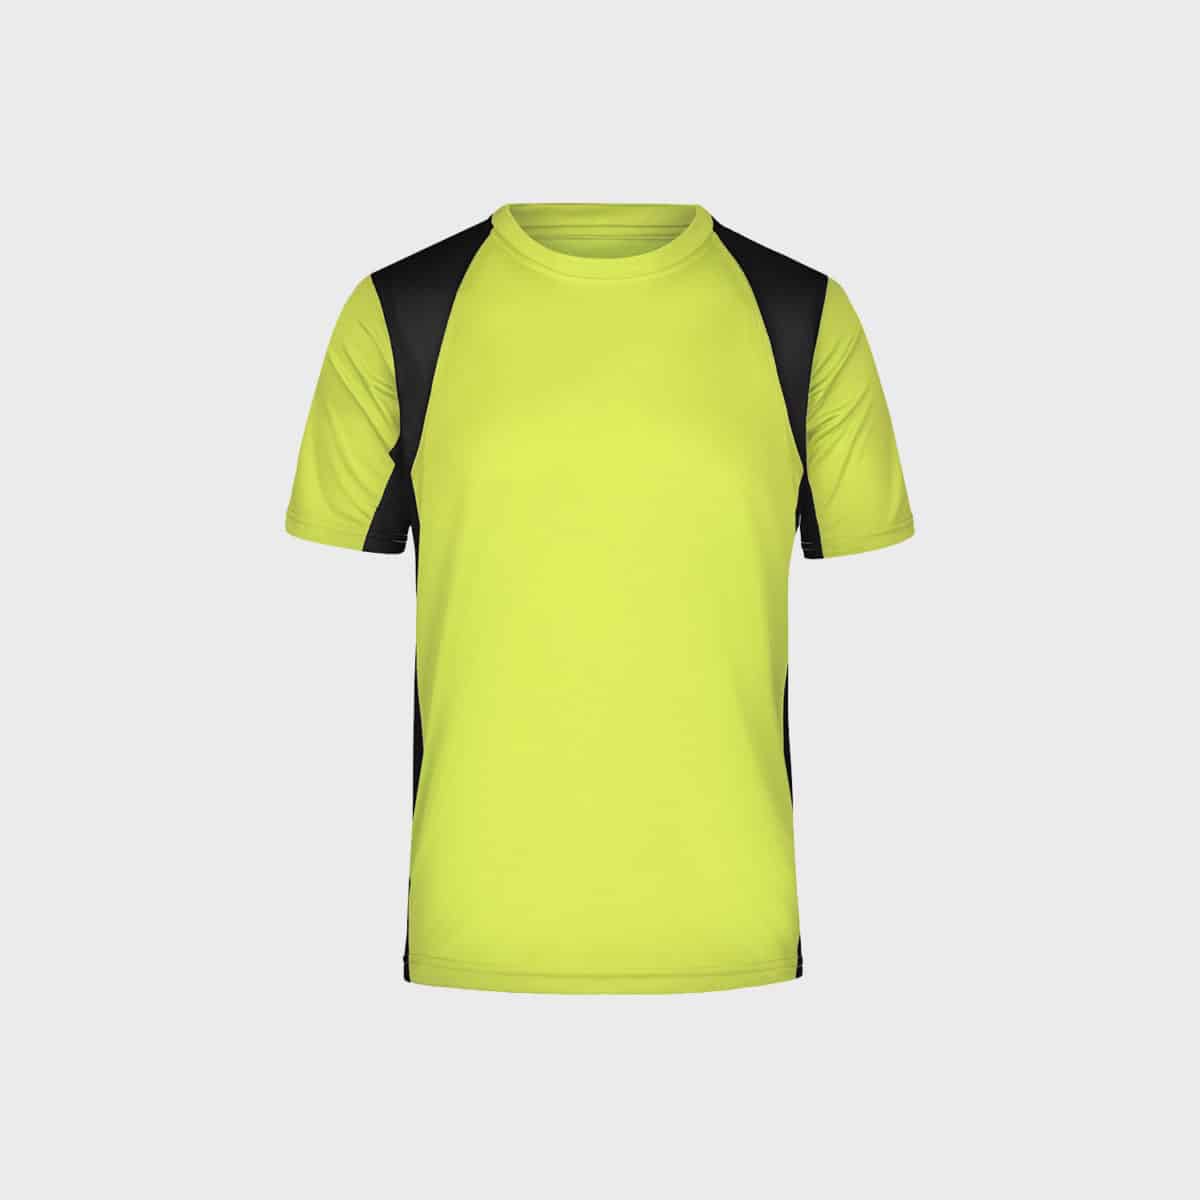 functional-running-sport-shirt-men-fluo-yellow-black-acquistare-ricamare_la_produzione